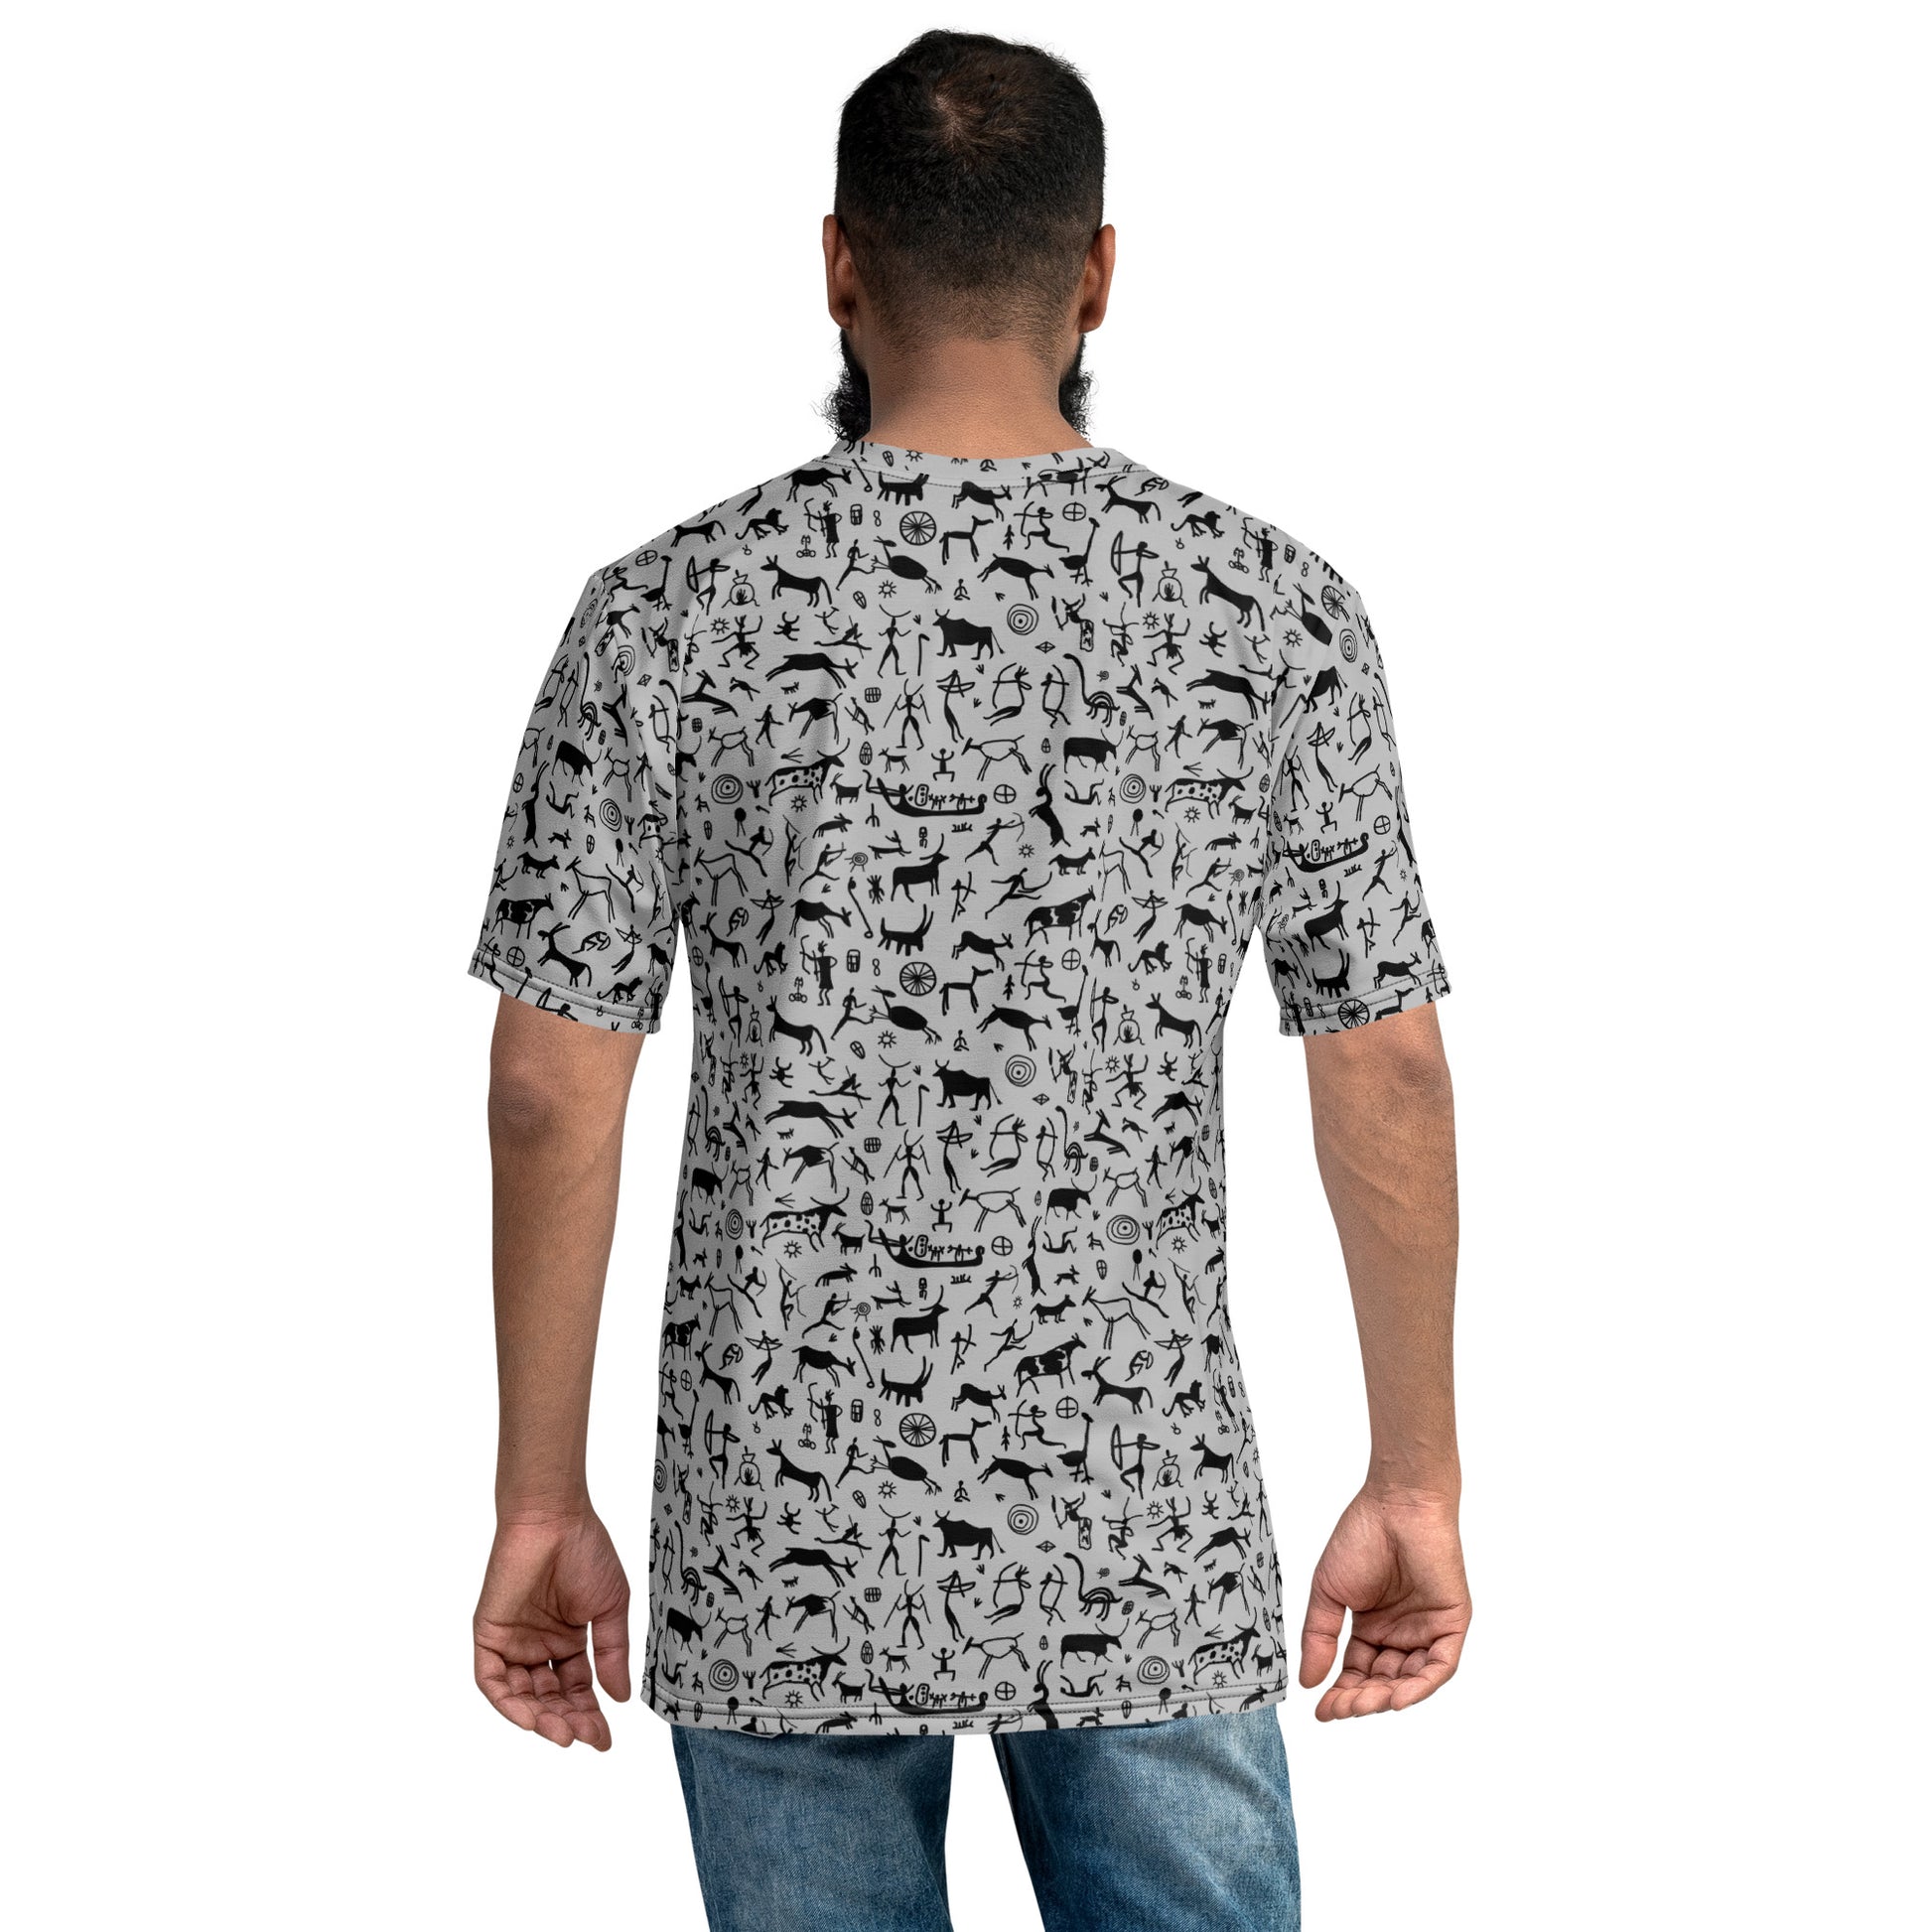 Men's t-shirt History kudrylab